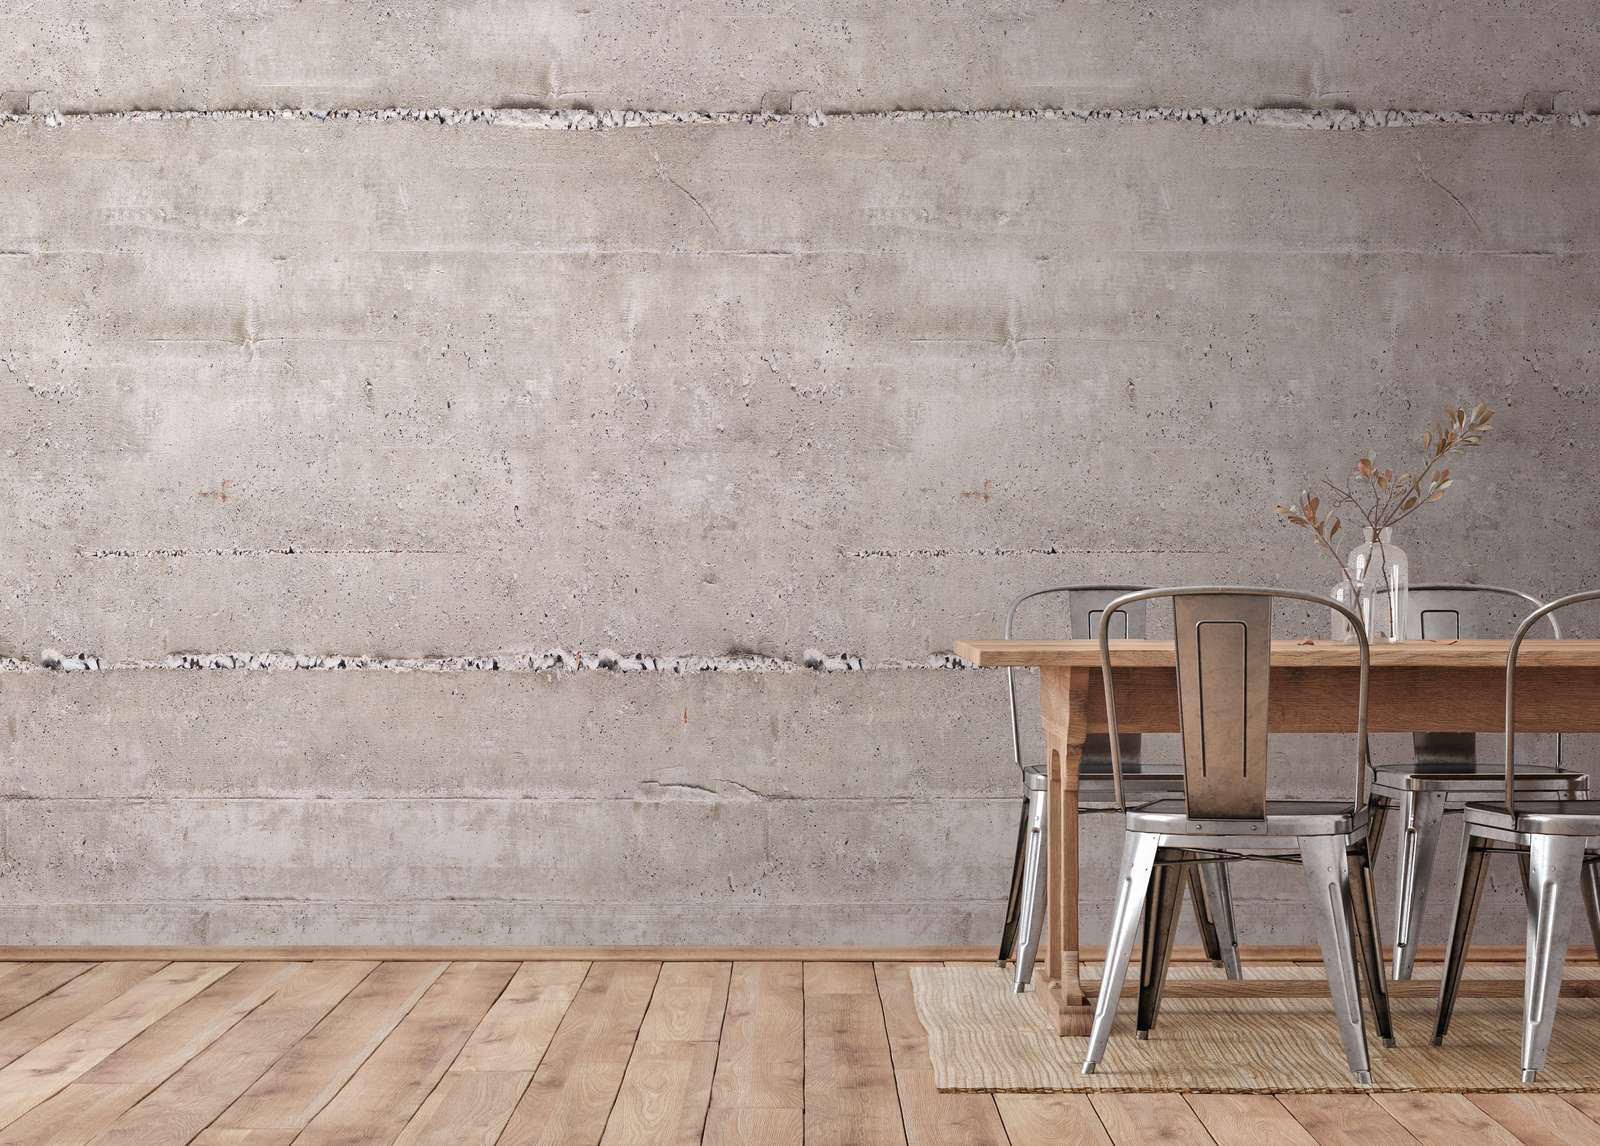             Concrete-look wallpaper in light colours - grey, cream
        